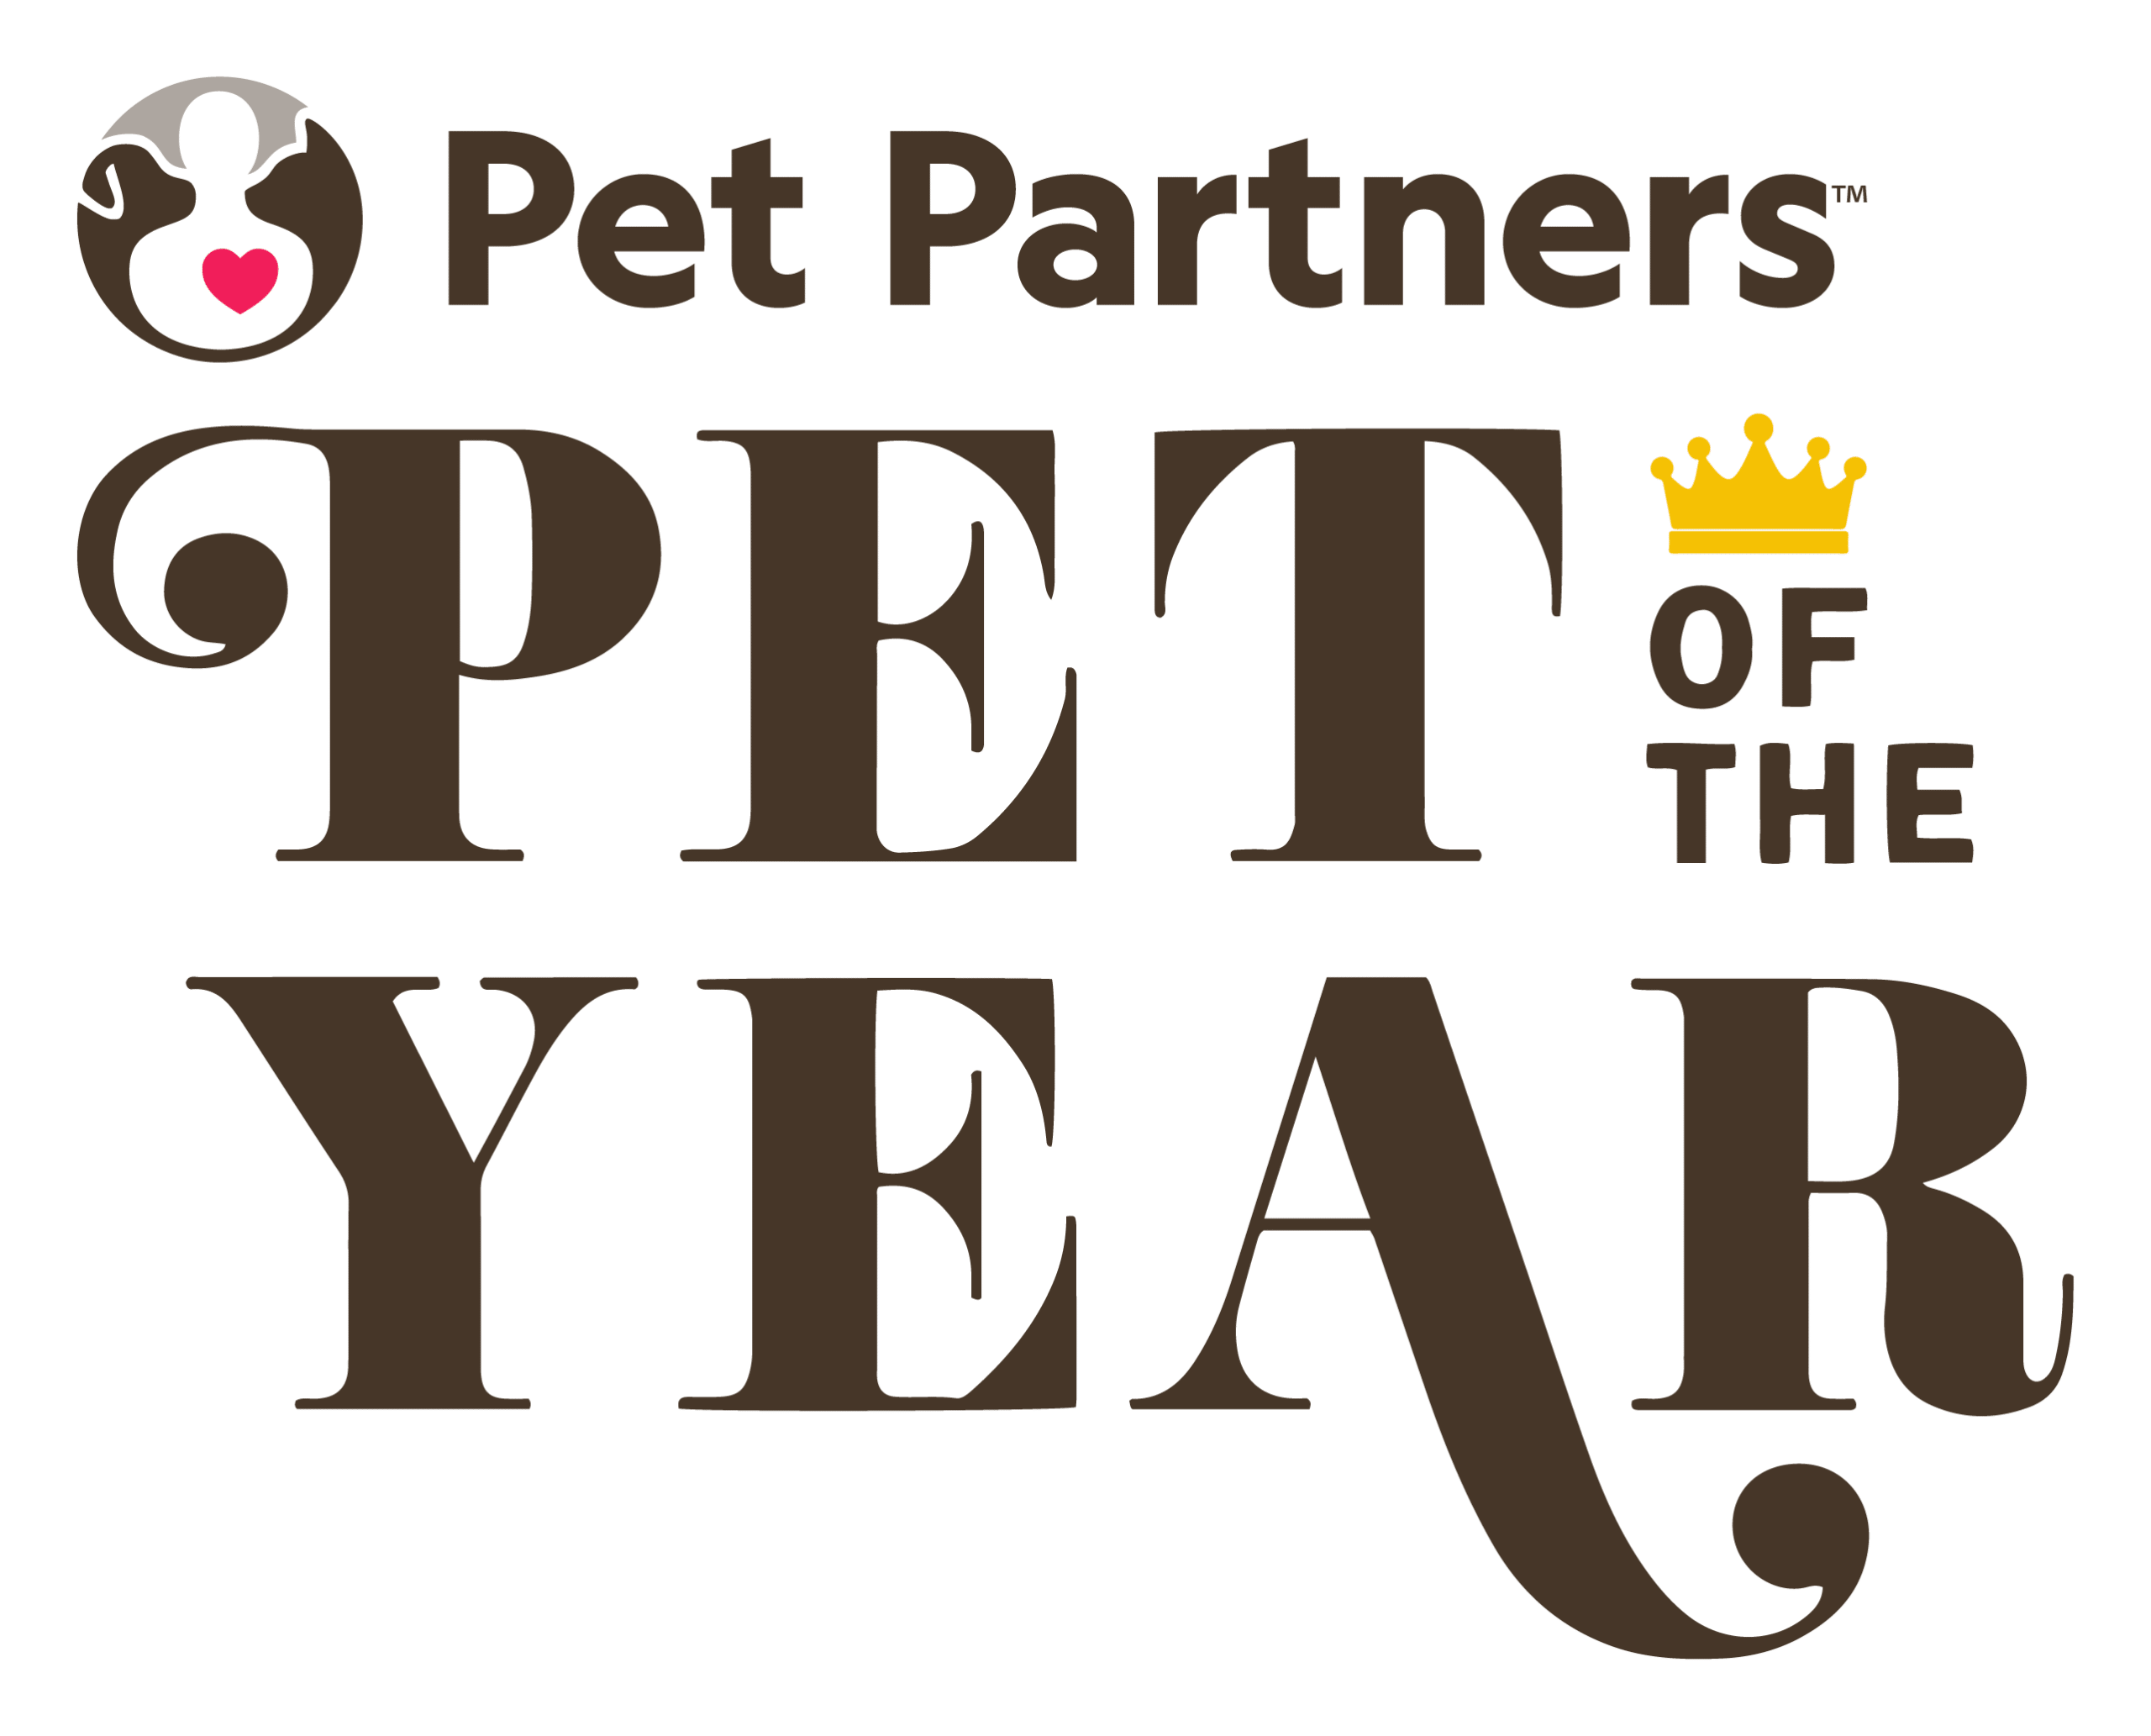 Pet Partners Pet of the Year logo